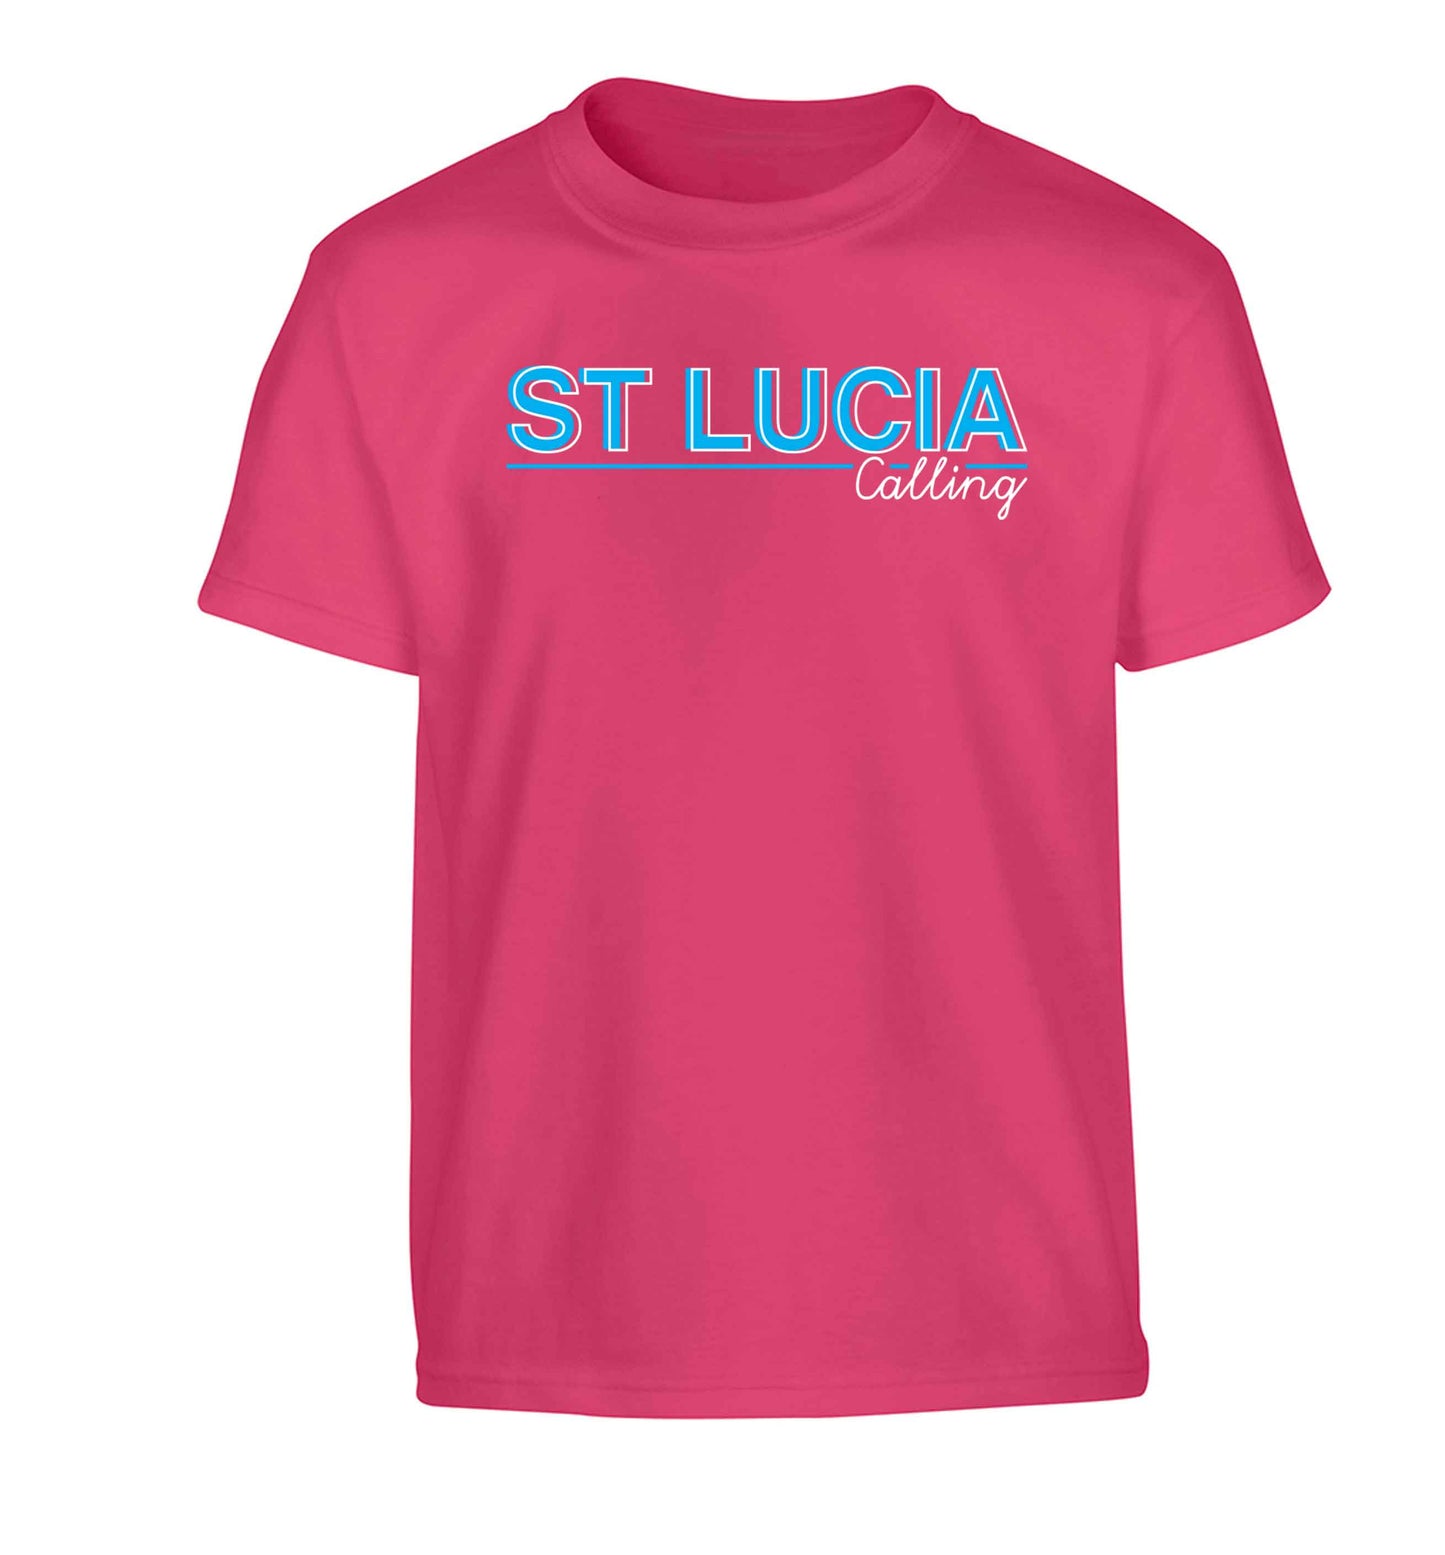 St Lucia calling Children's pink Tshirt 12-13 Years